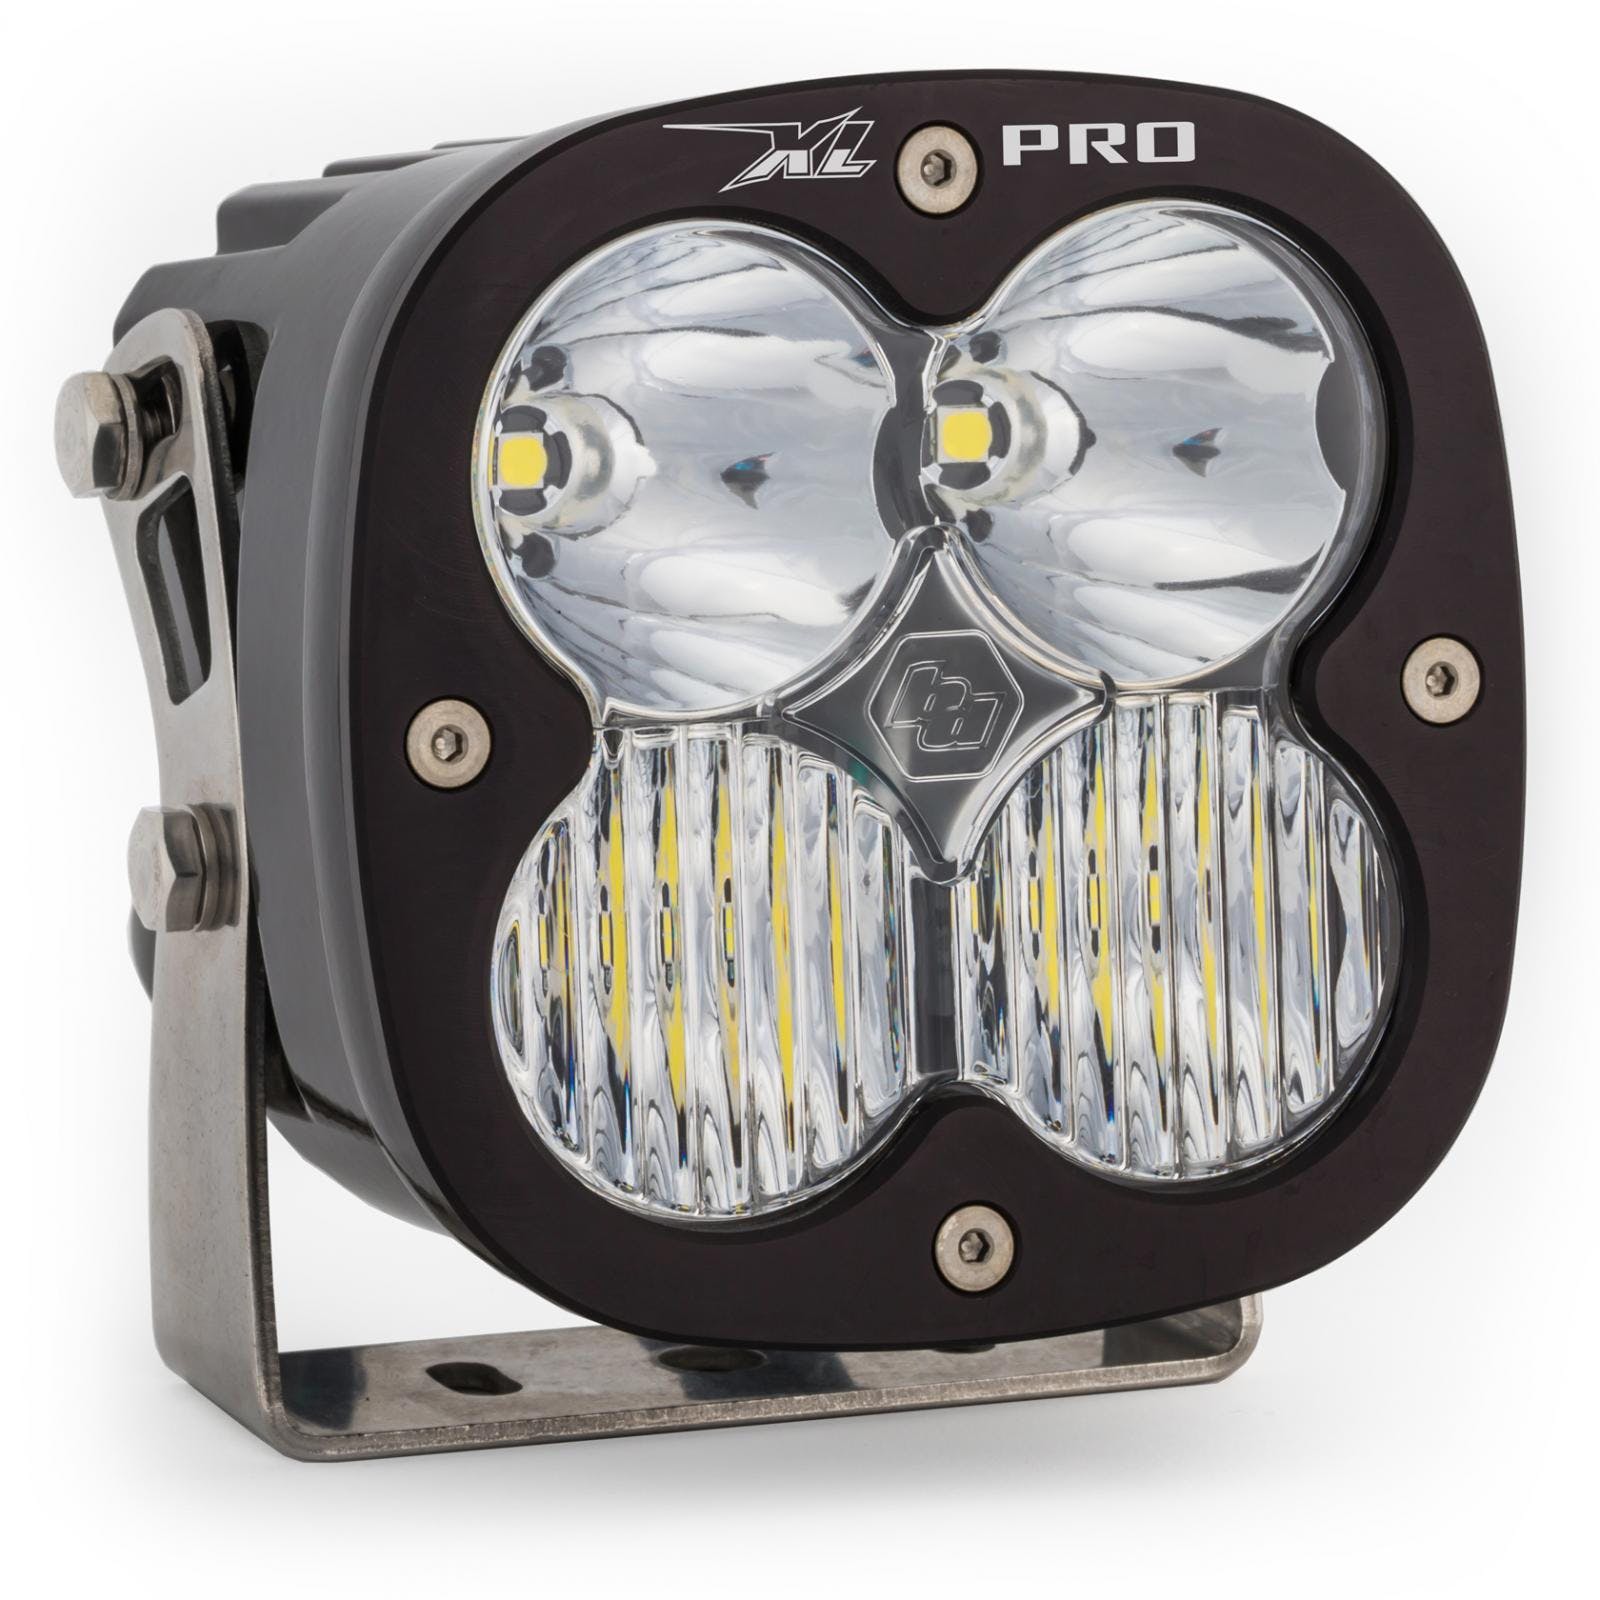 Baja Designs 500003 LED Light Pods Clear Lens Spot Each XL Pro Driving/Combo